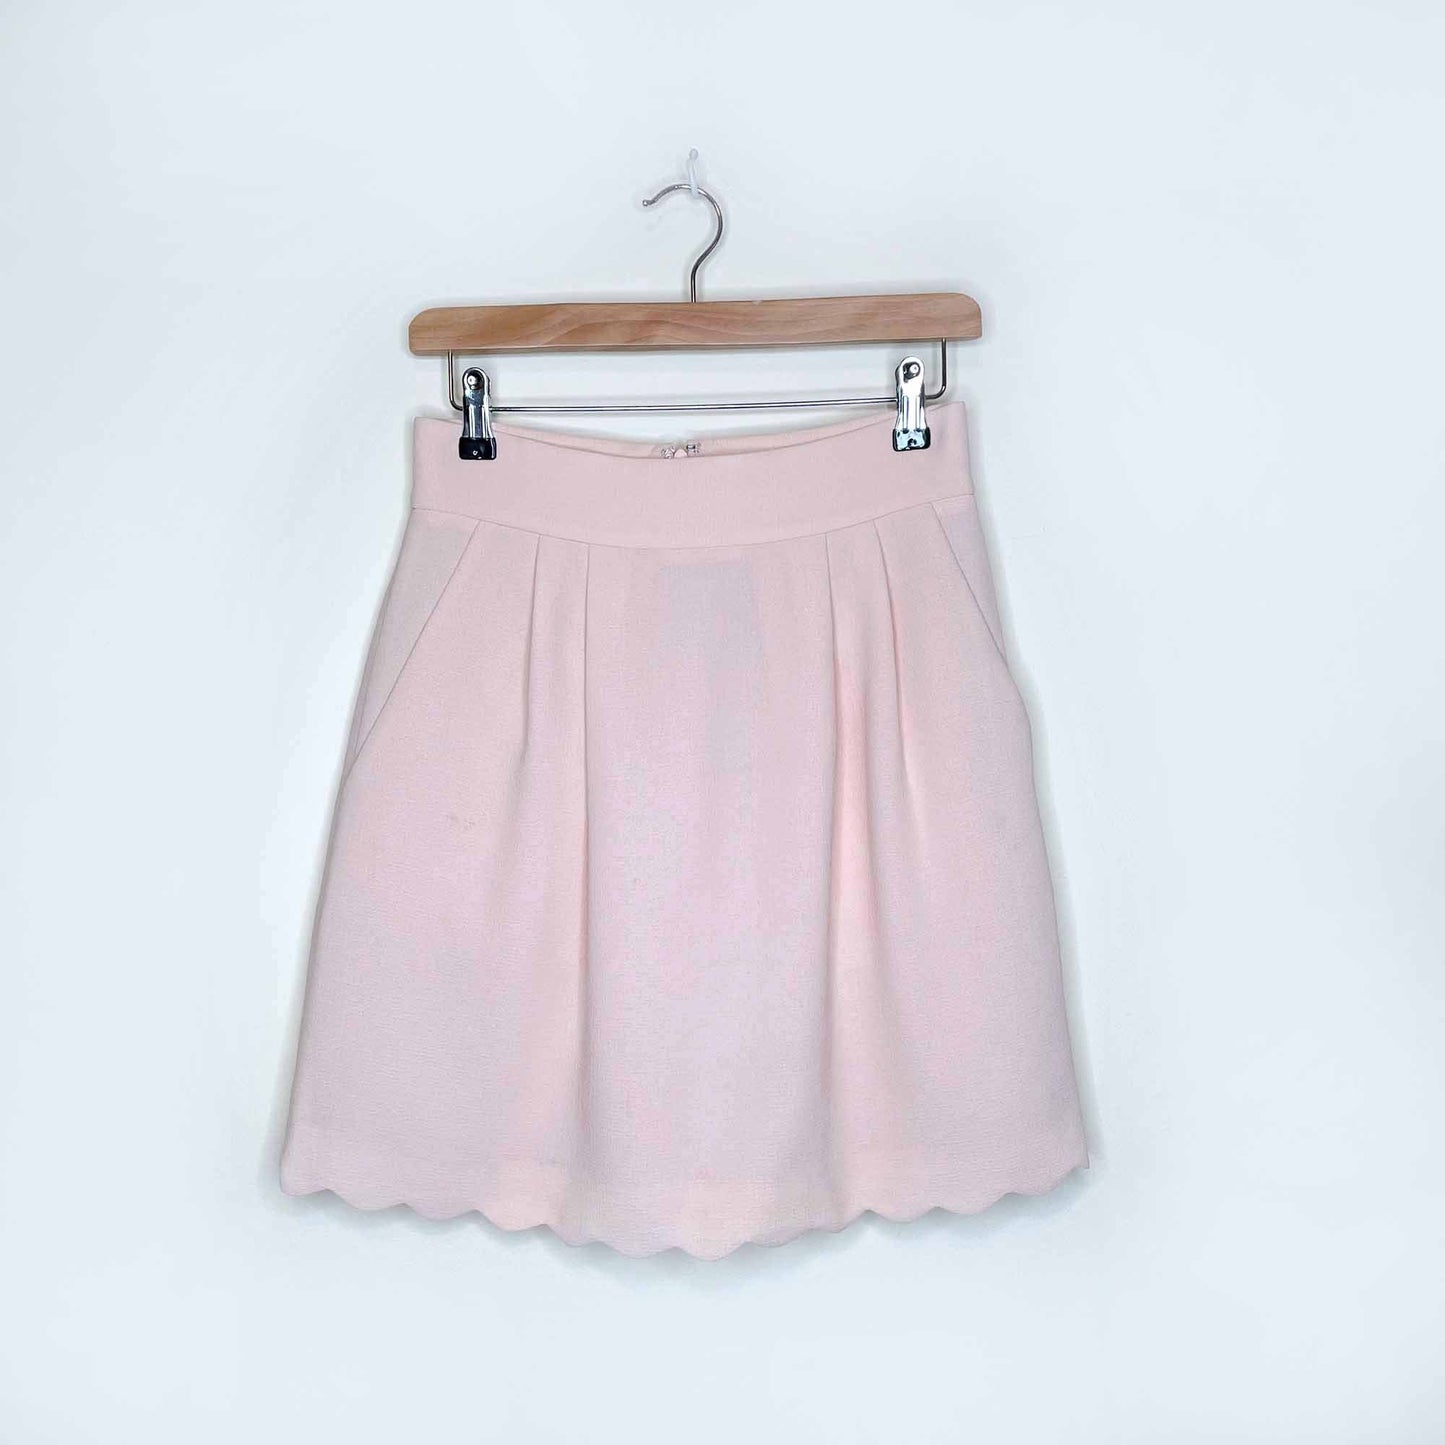 club monaco peach hanne crepe skirt with scallop hem - size 4